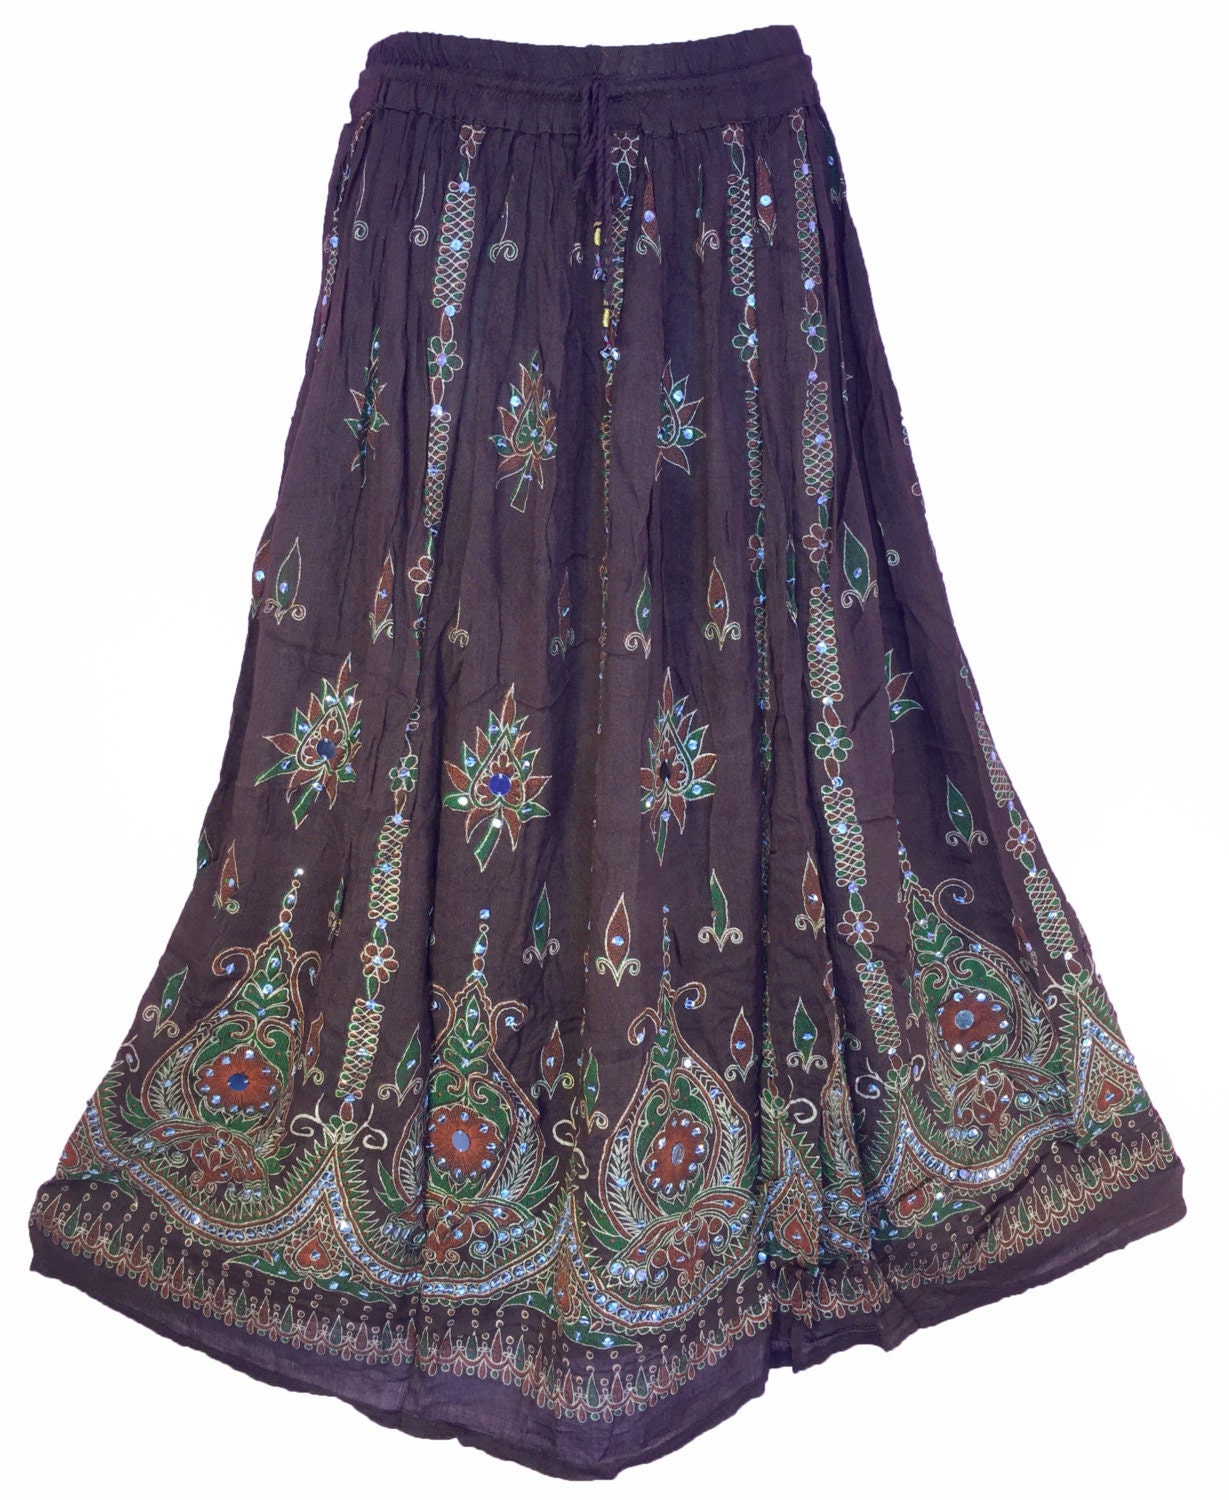 Brown Earth Tone Skirt Boho Gypsy Skirt Bollywood India